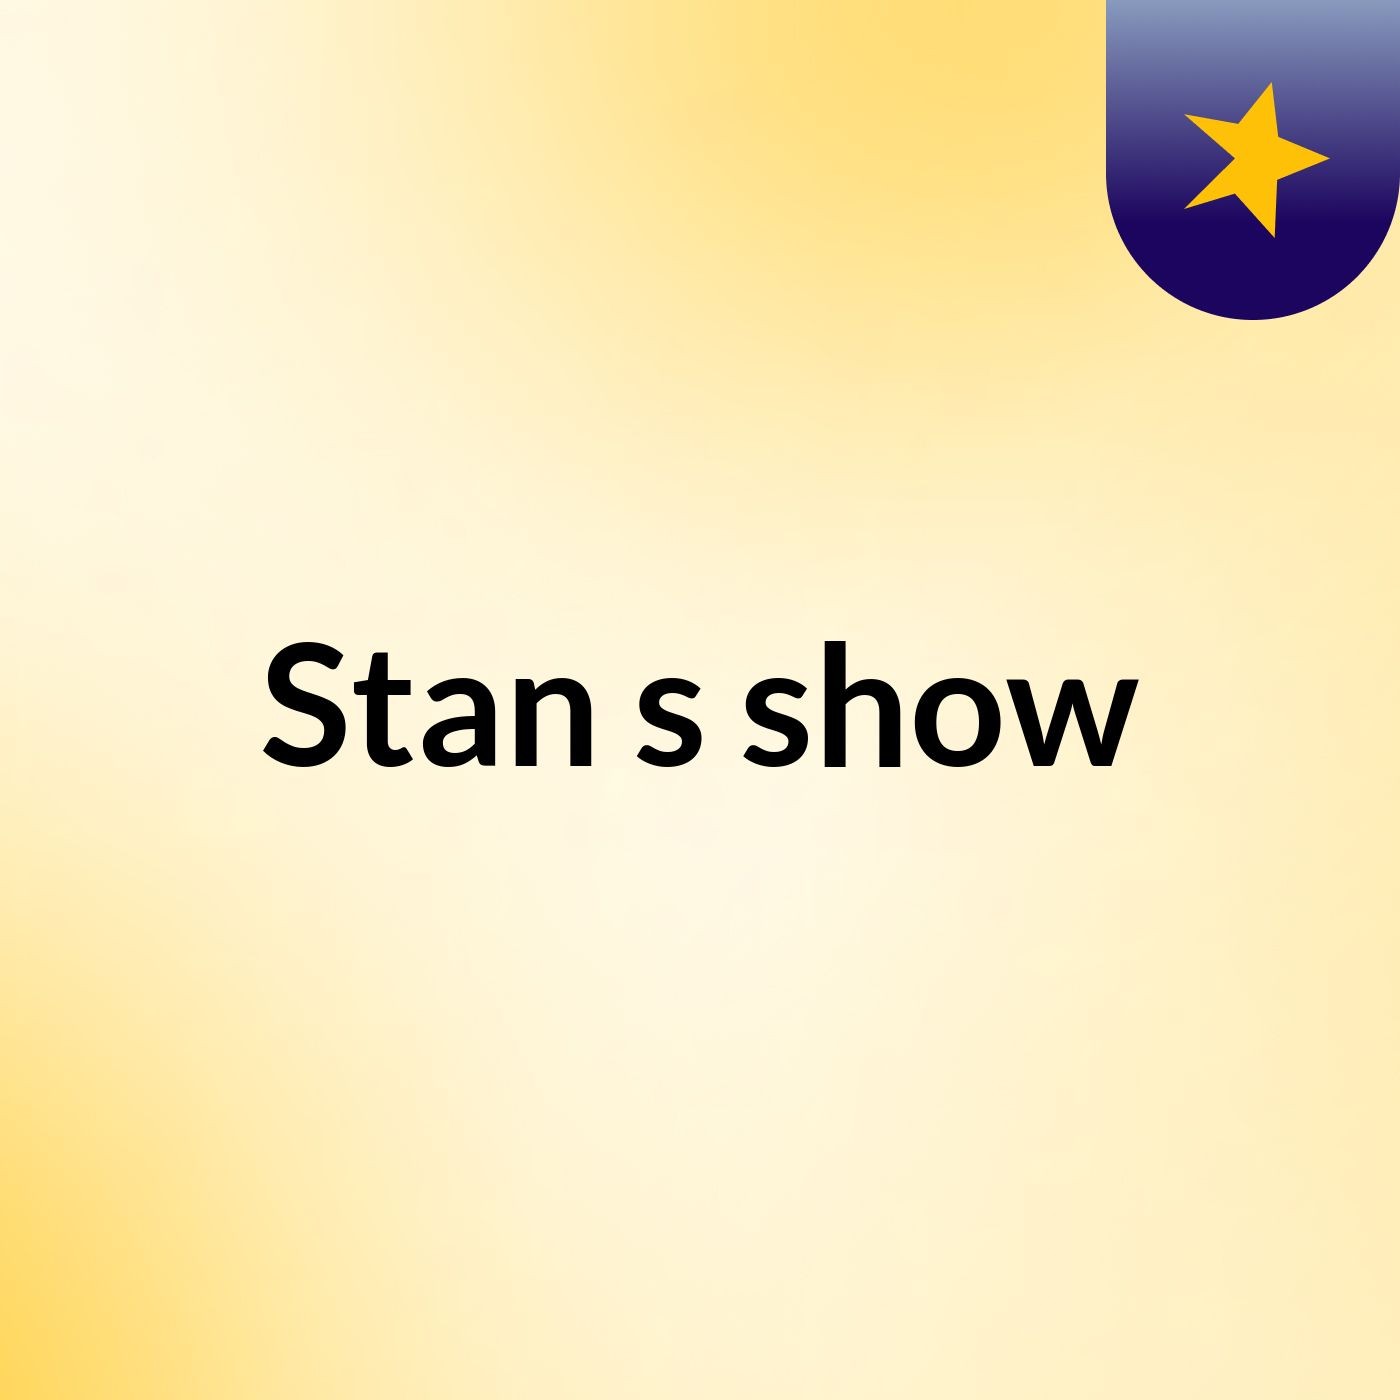 Stan's show